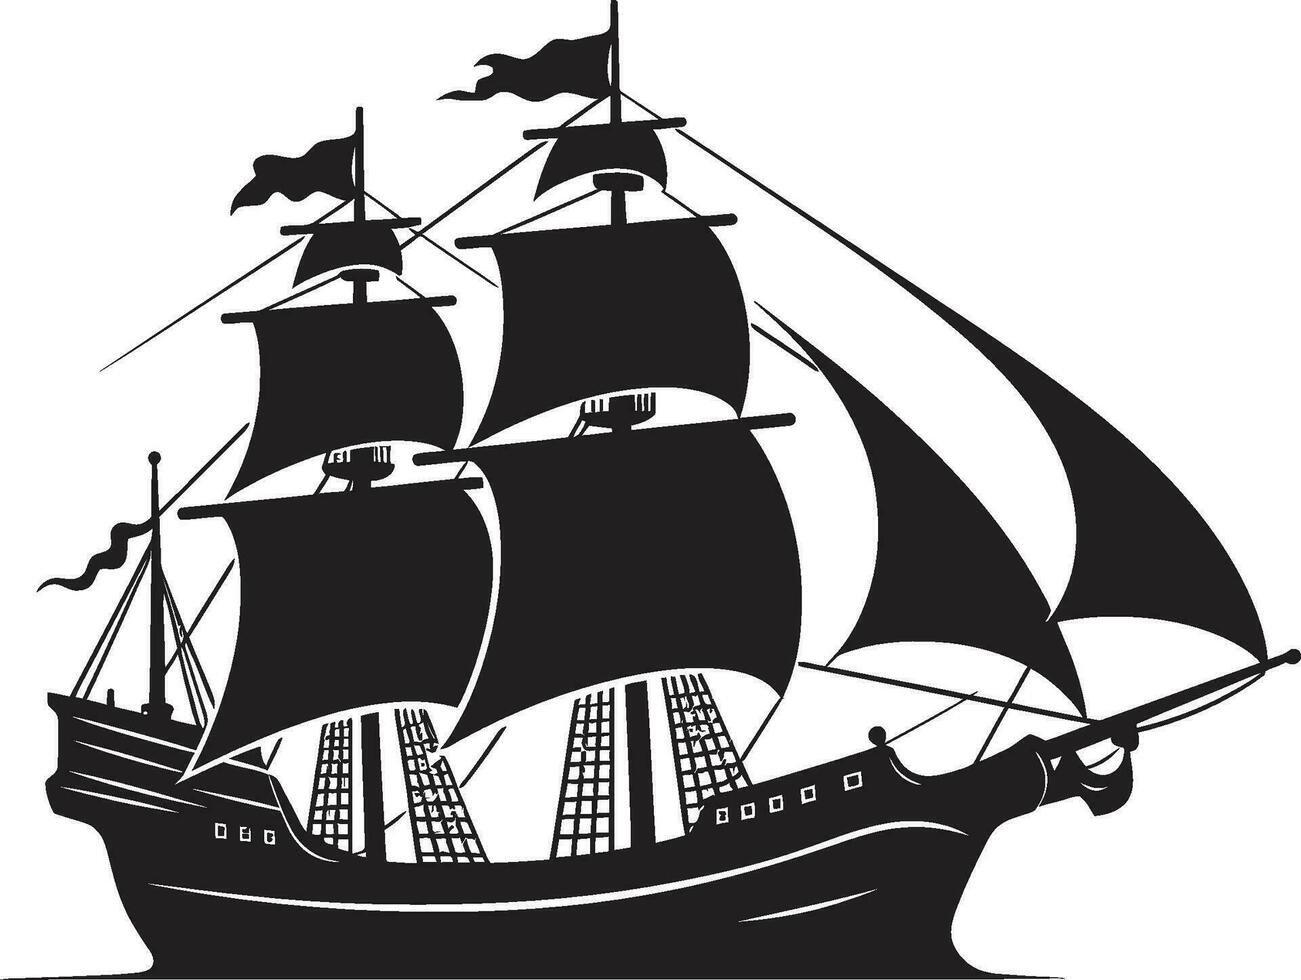 gammal odyssey svart fartyg i vektor årgång sjöfart gammal fartyg emblem